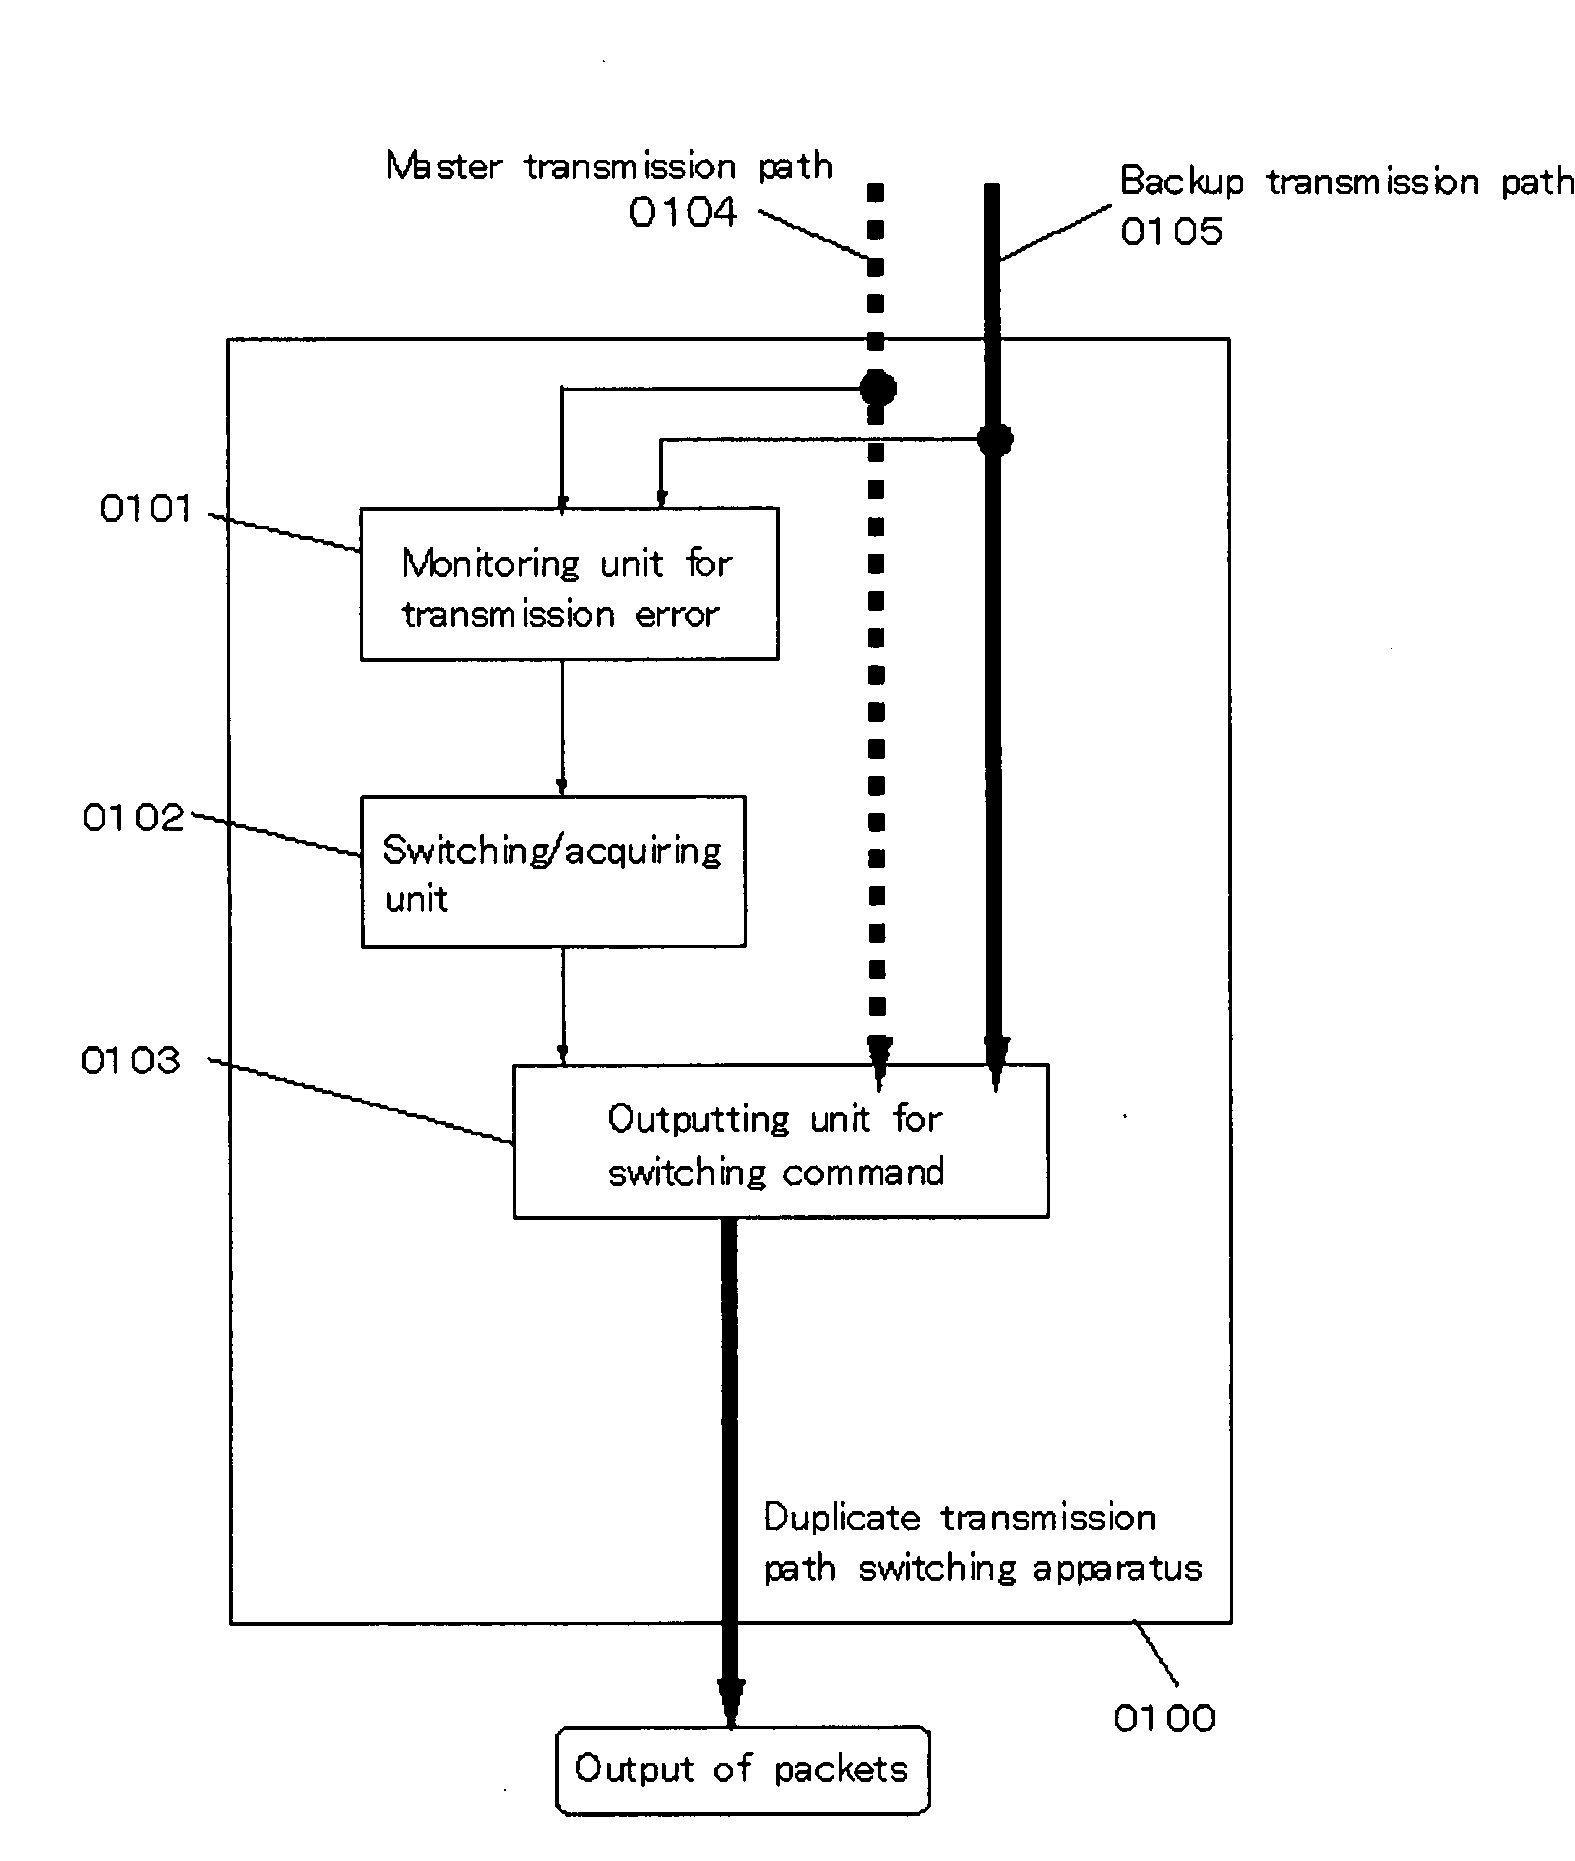 Duplicate Transmission Path Switching Device